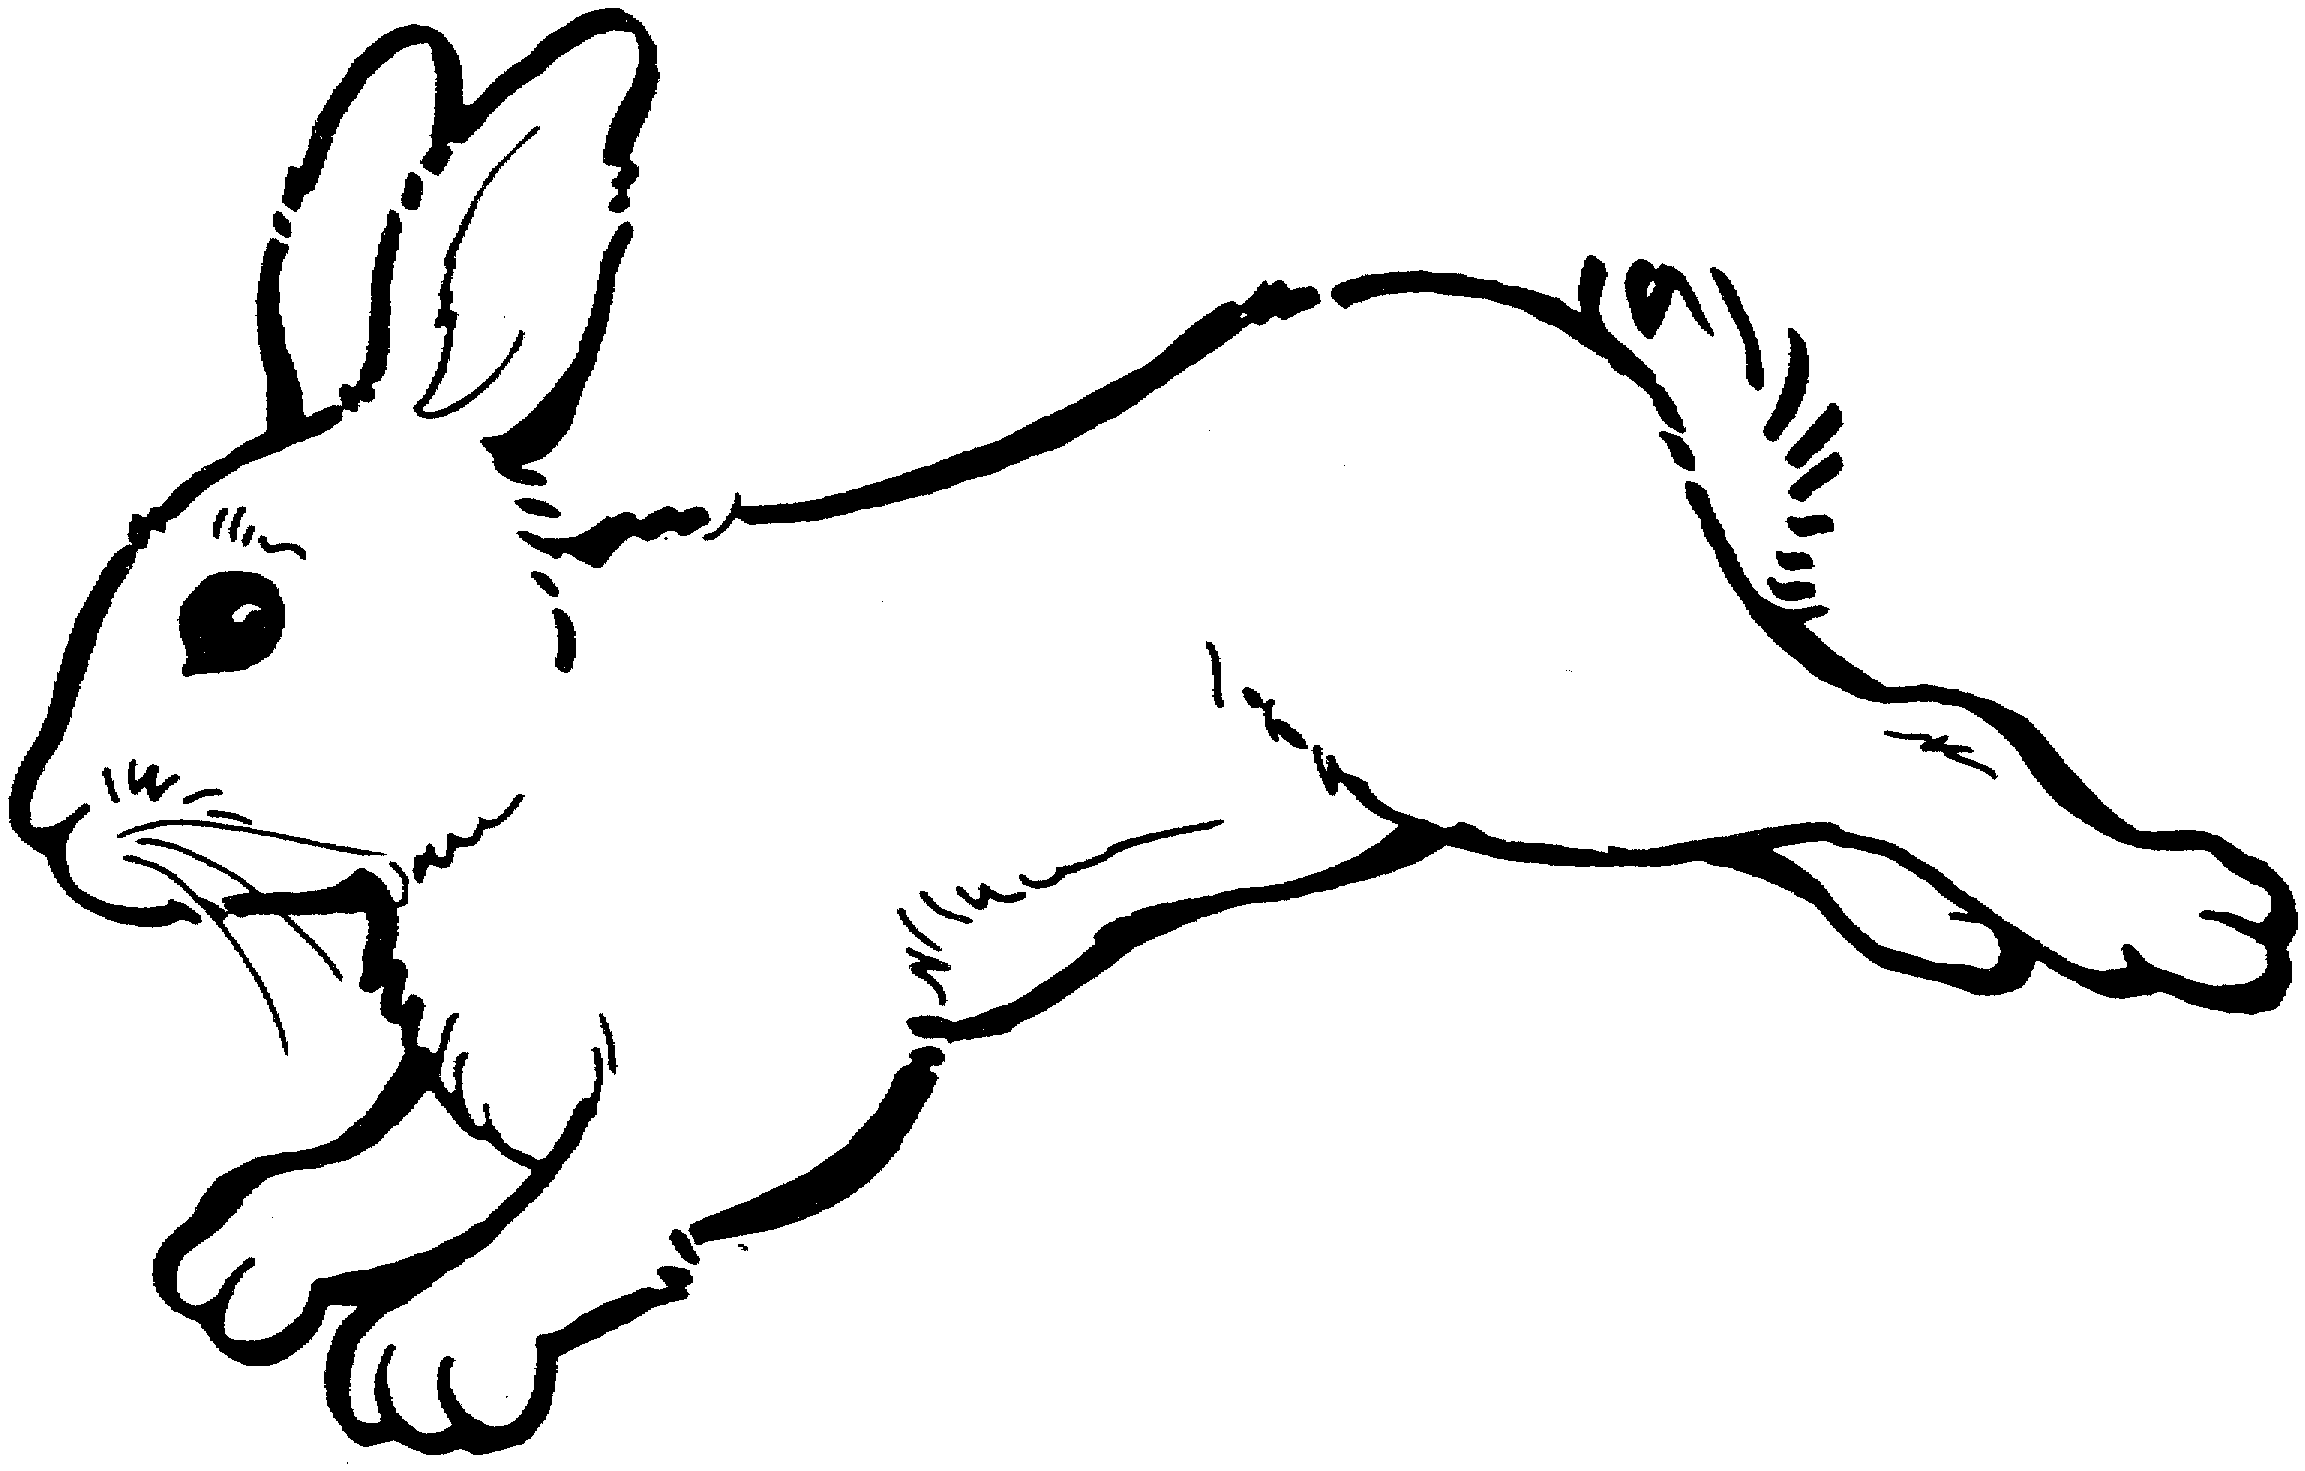 Peter Rabbit Clip Art